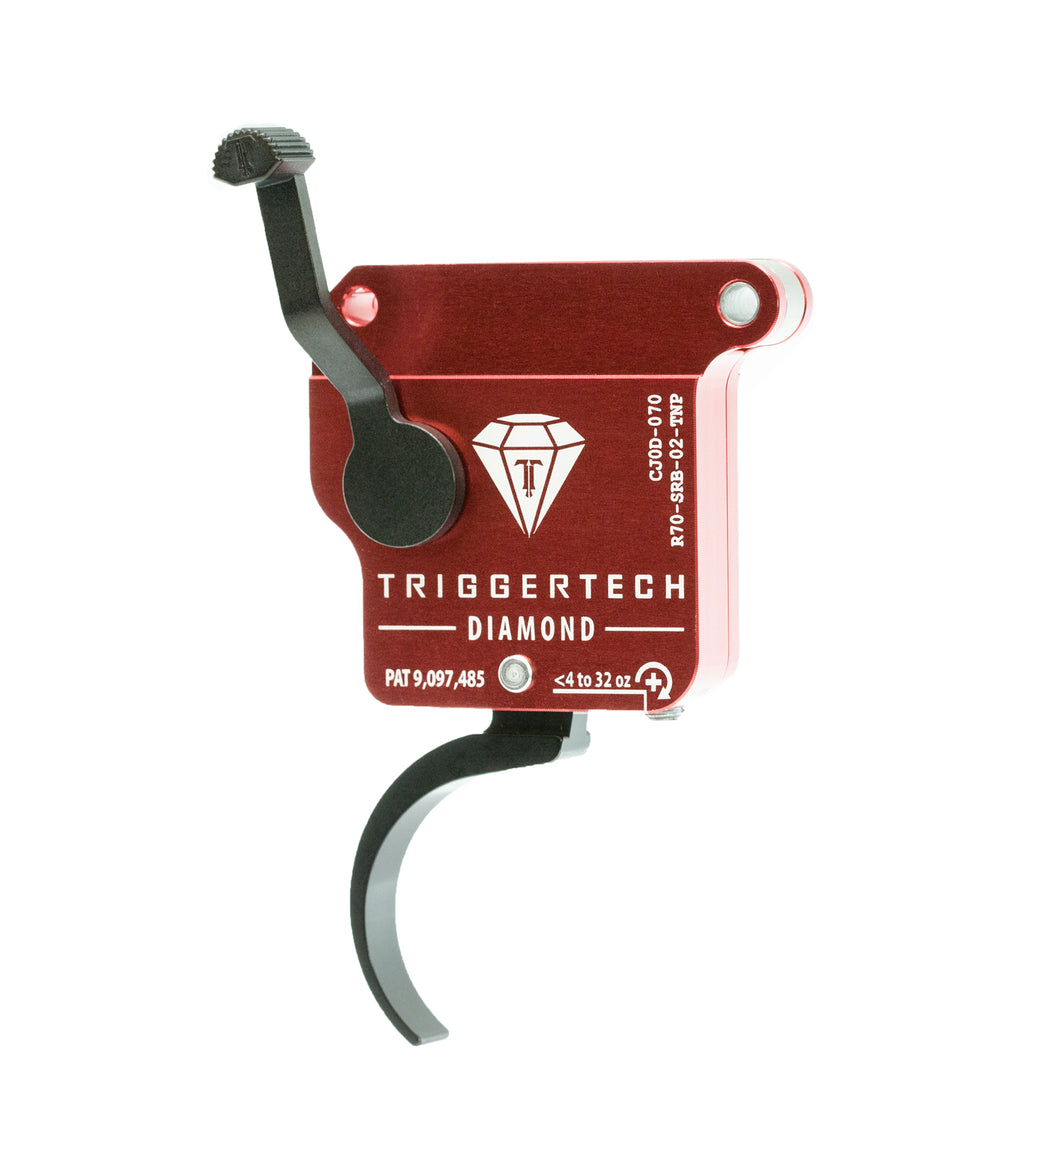 Triggertech Diamond pro-curved Left